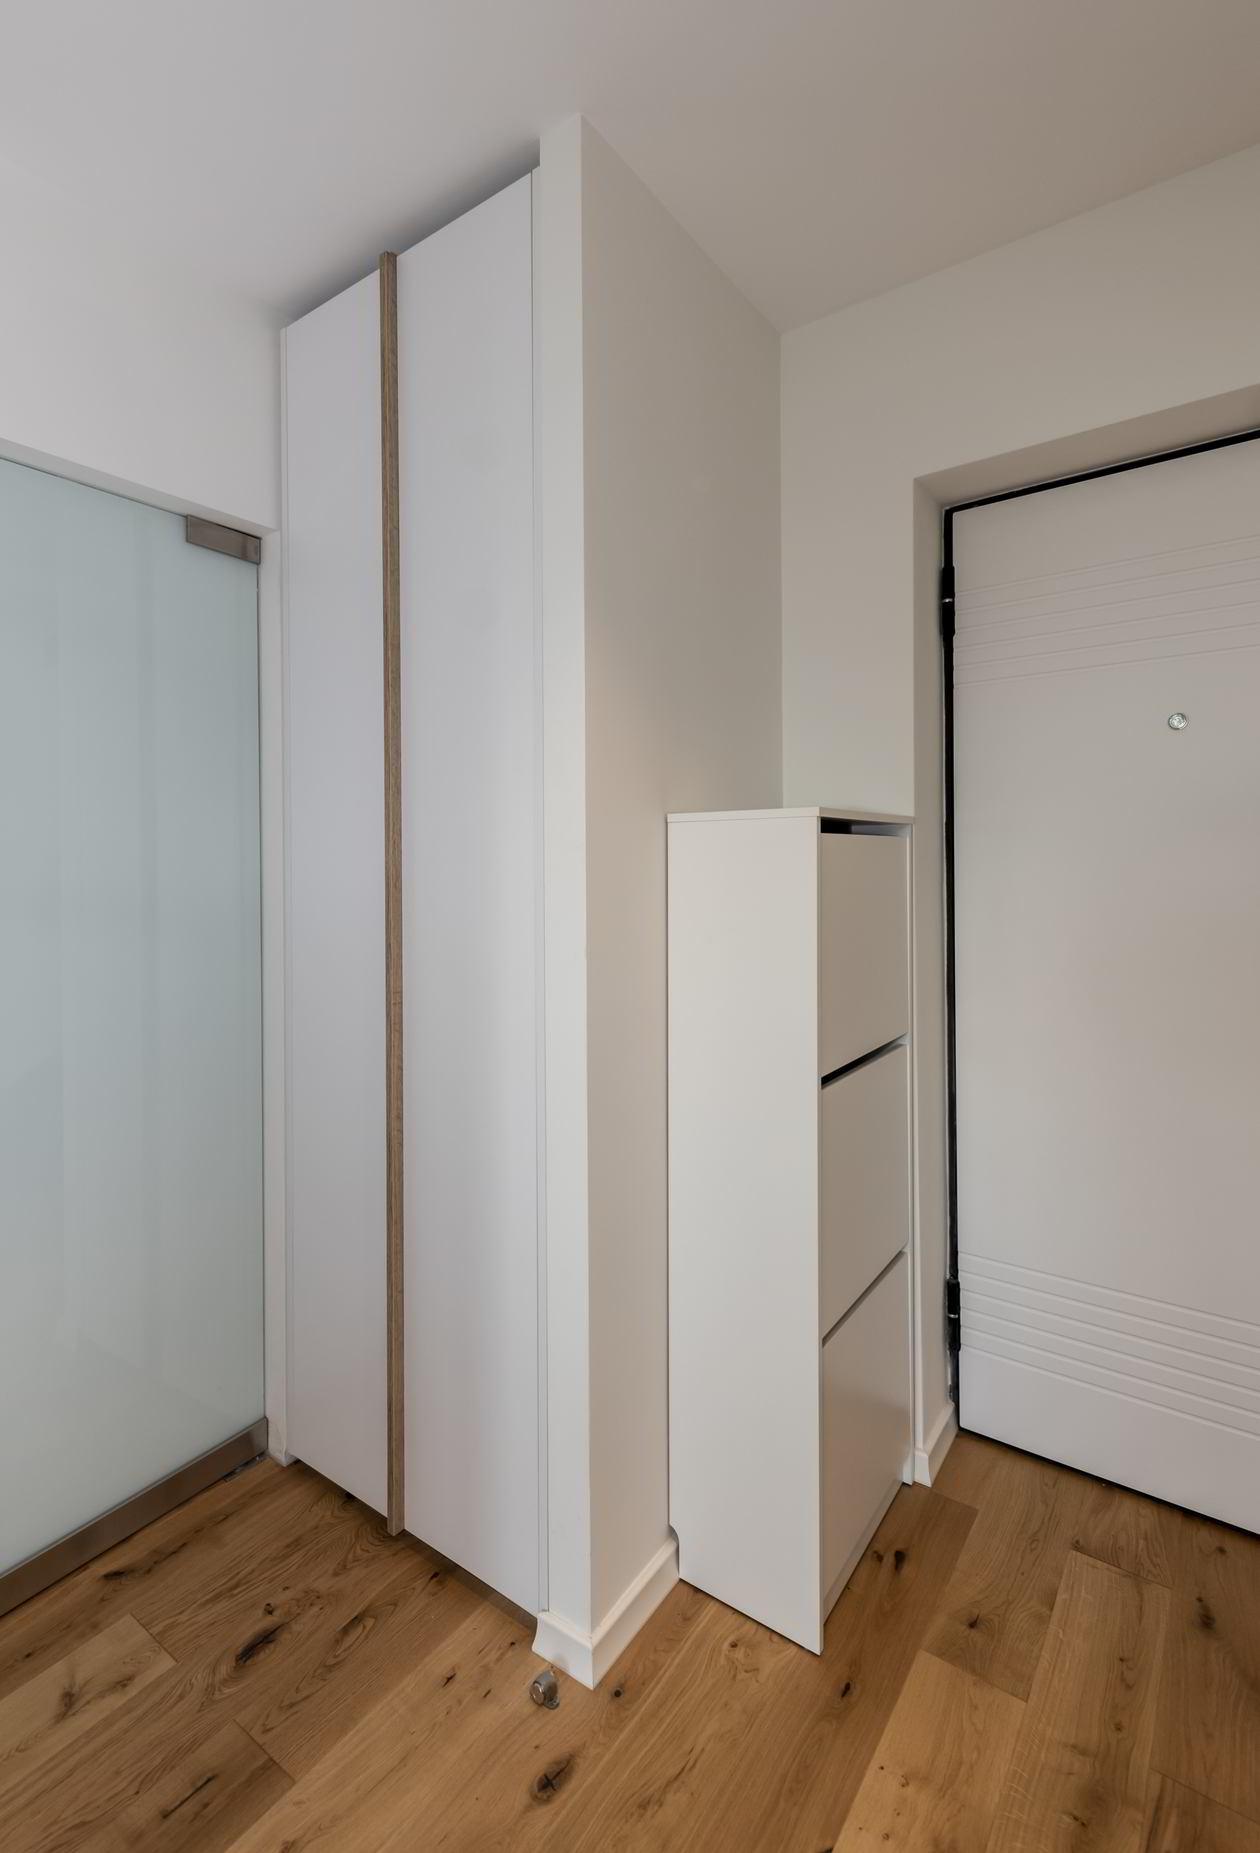 Apartament cu 2 camere, locuinta privata in Constanta, Mobilat integral, 06 Decembrie 2019 COD.12428